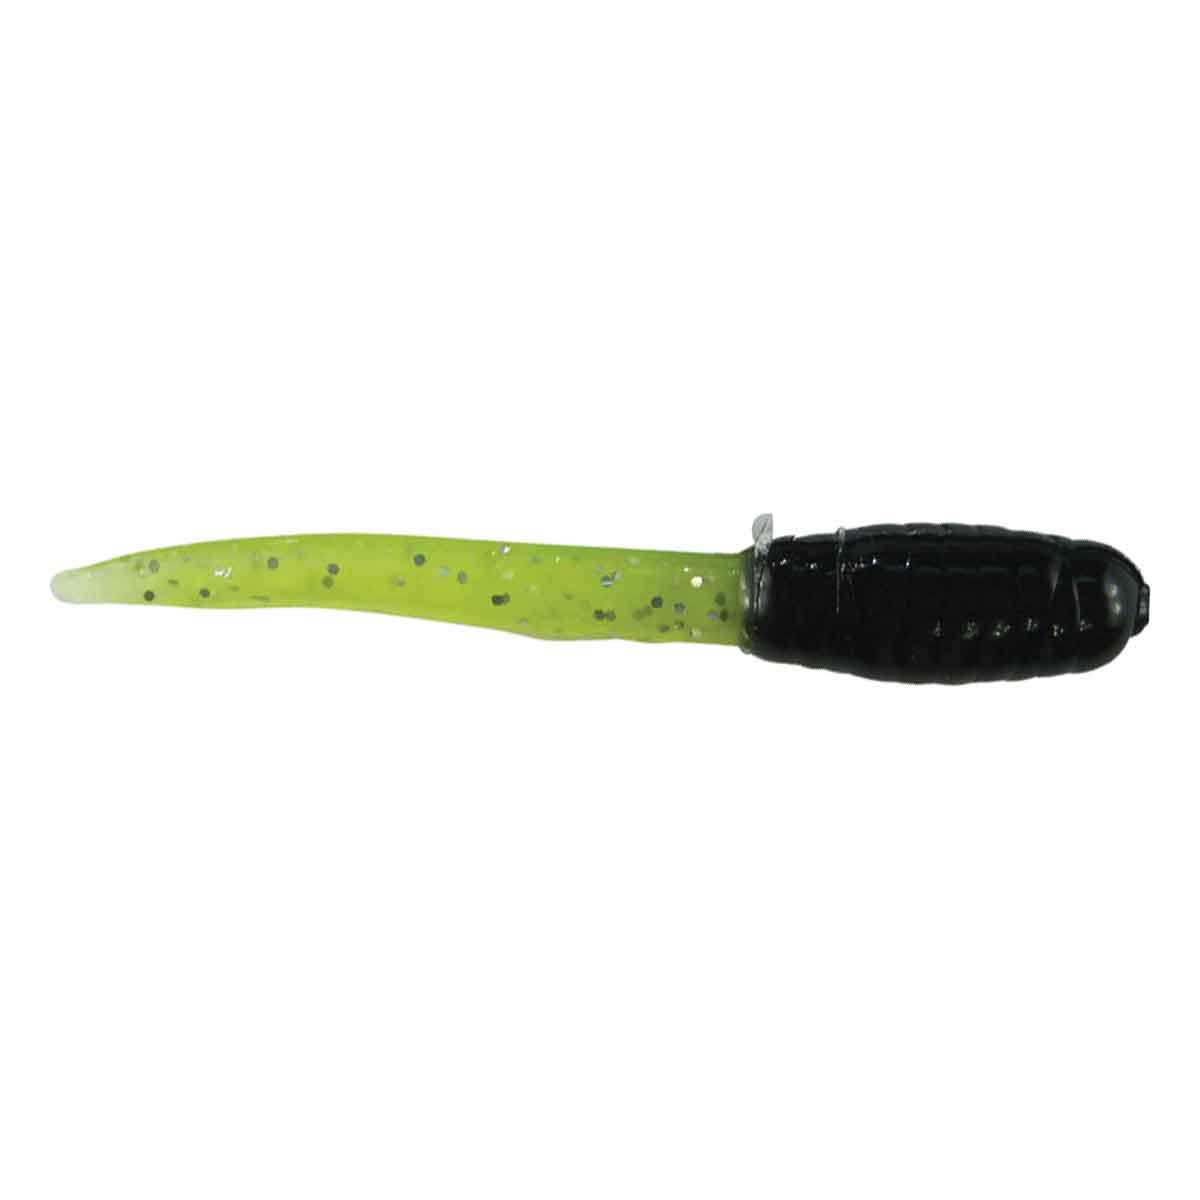 Panfish Stinger_Black Chartreuse Sparkle